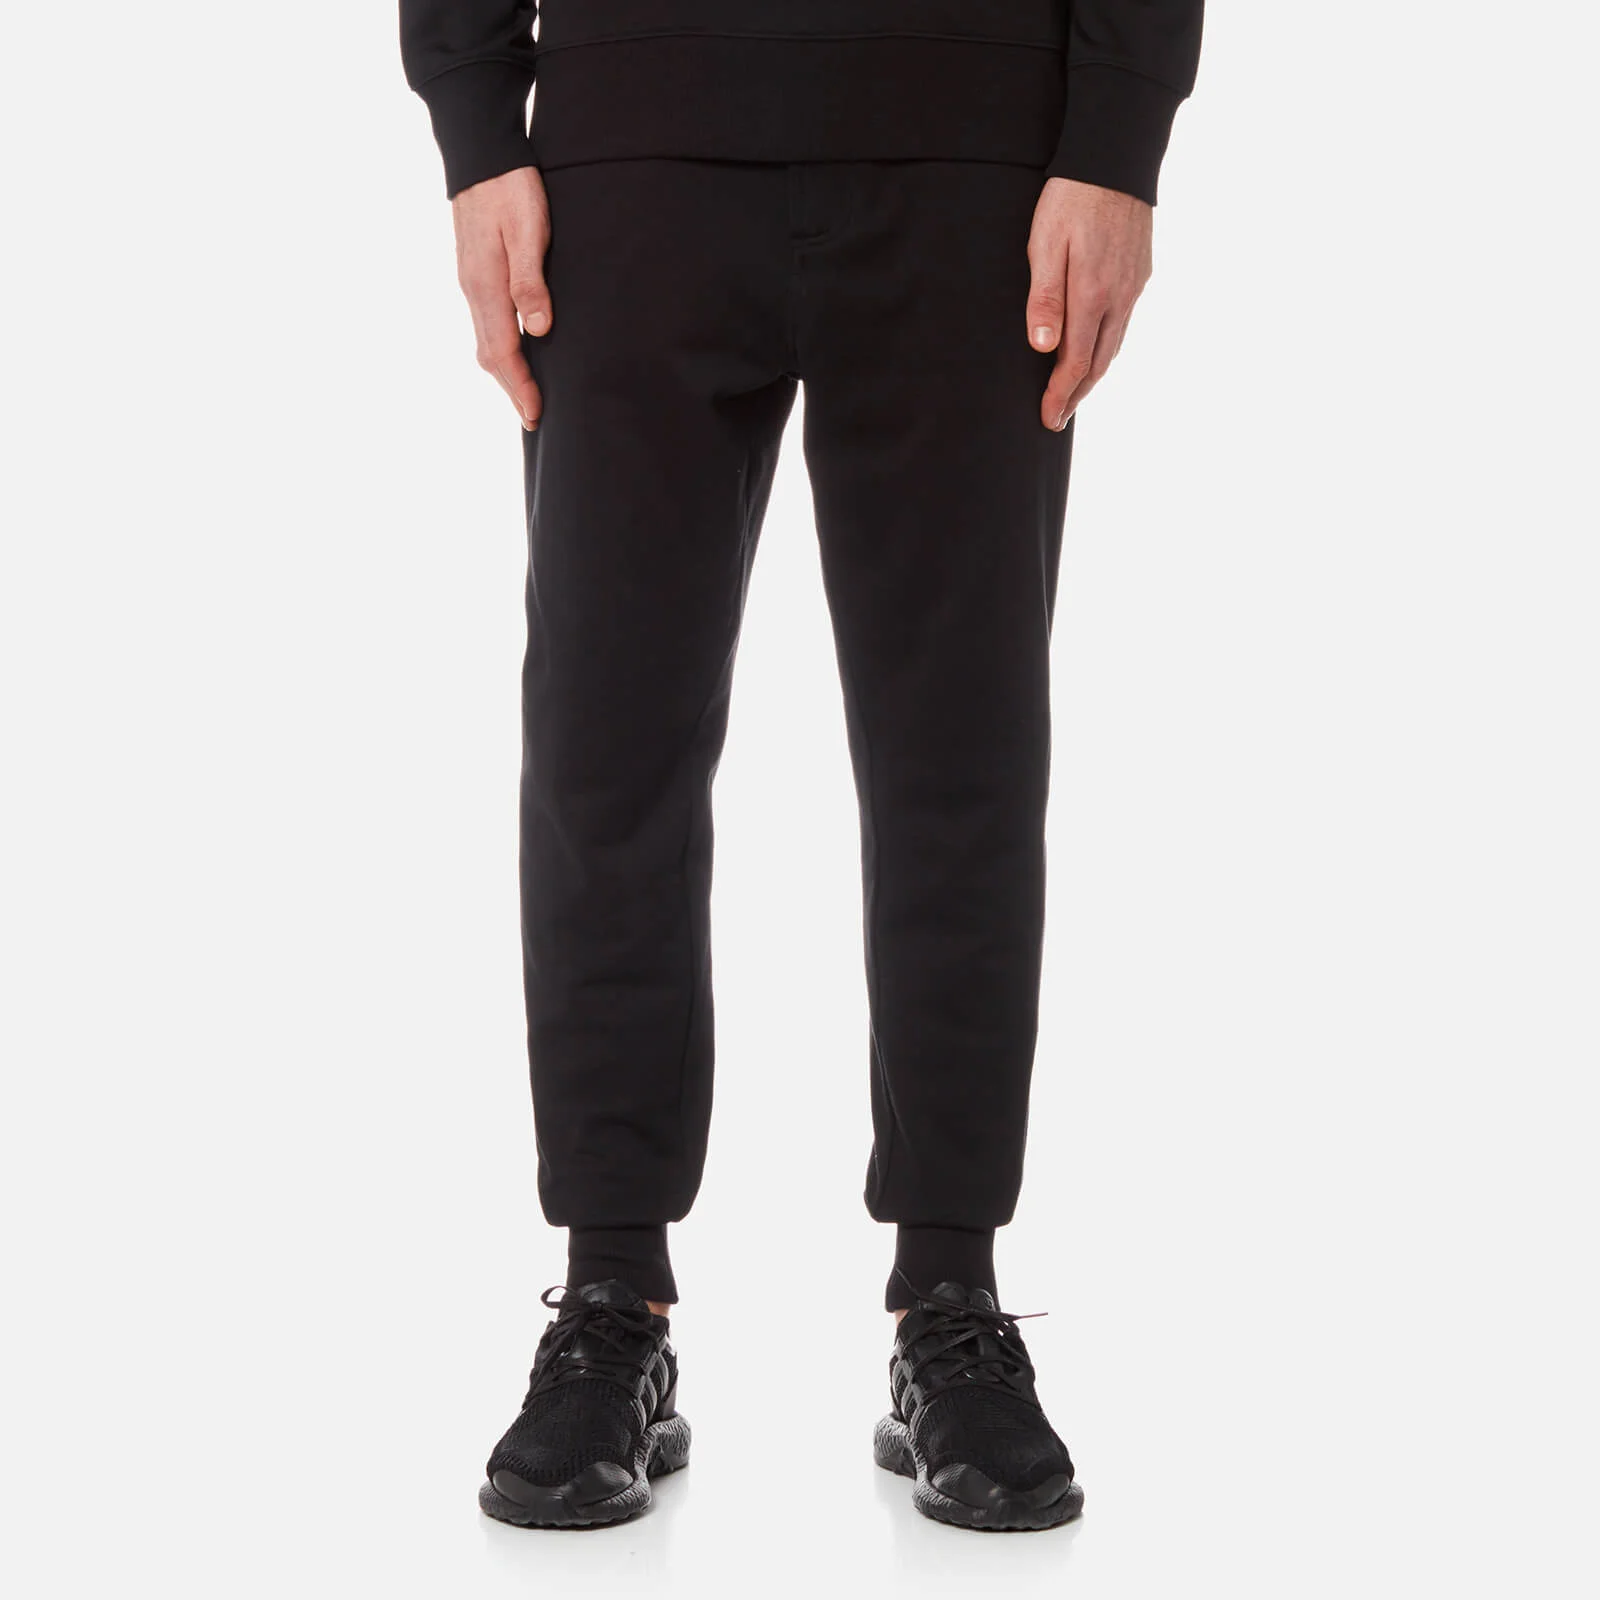 Y-3 Men's Cuff Pants - Black Image 1